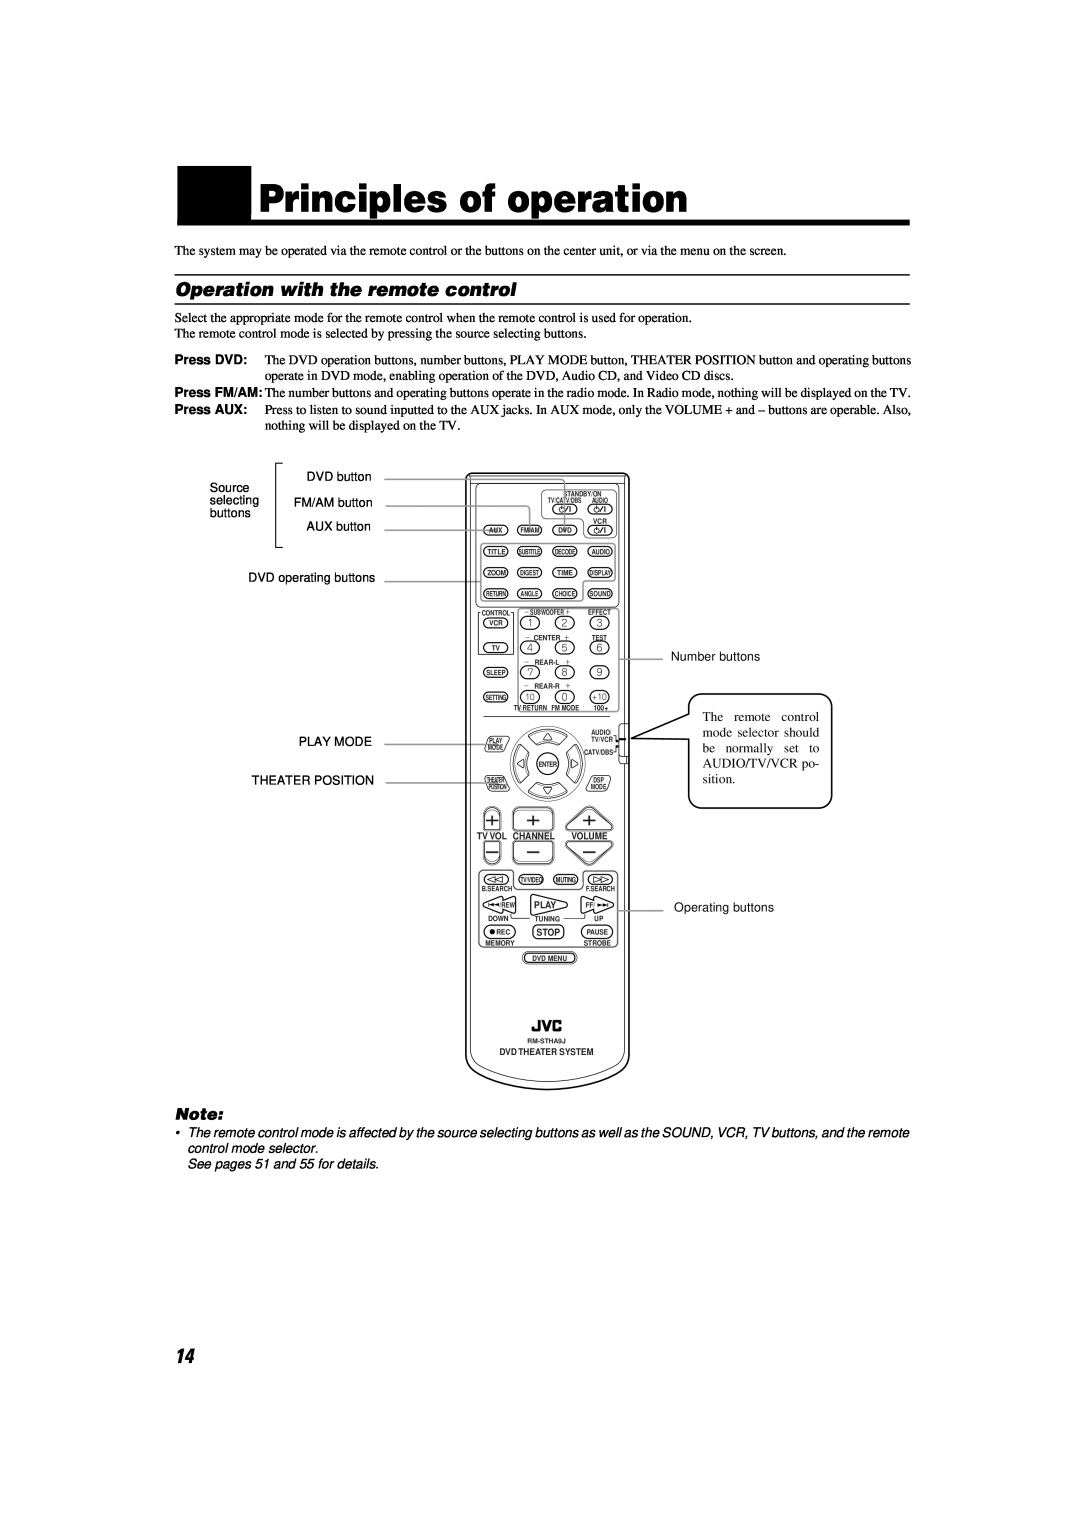 JVC TH-A9 manual Principles of operation, English English English, Operation with the remote control 